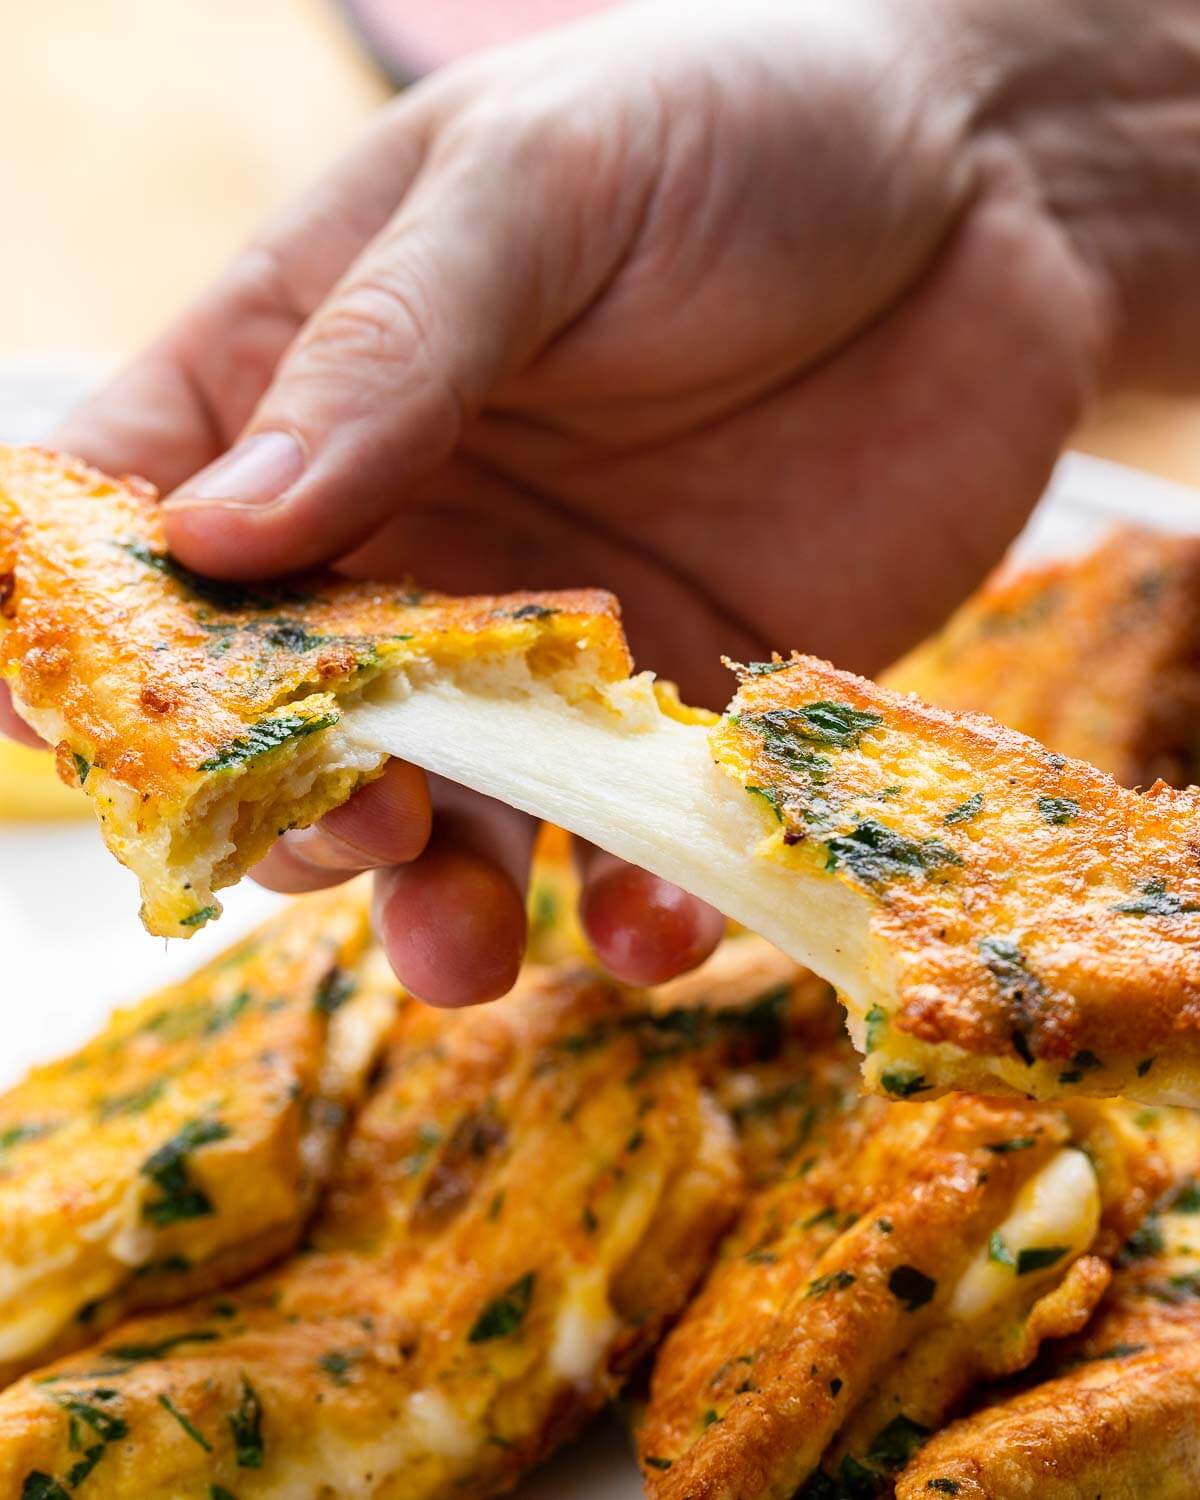 Hands pulling apart fried mozzarella sandwich.